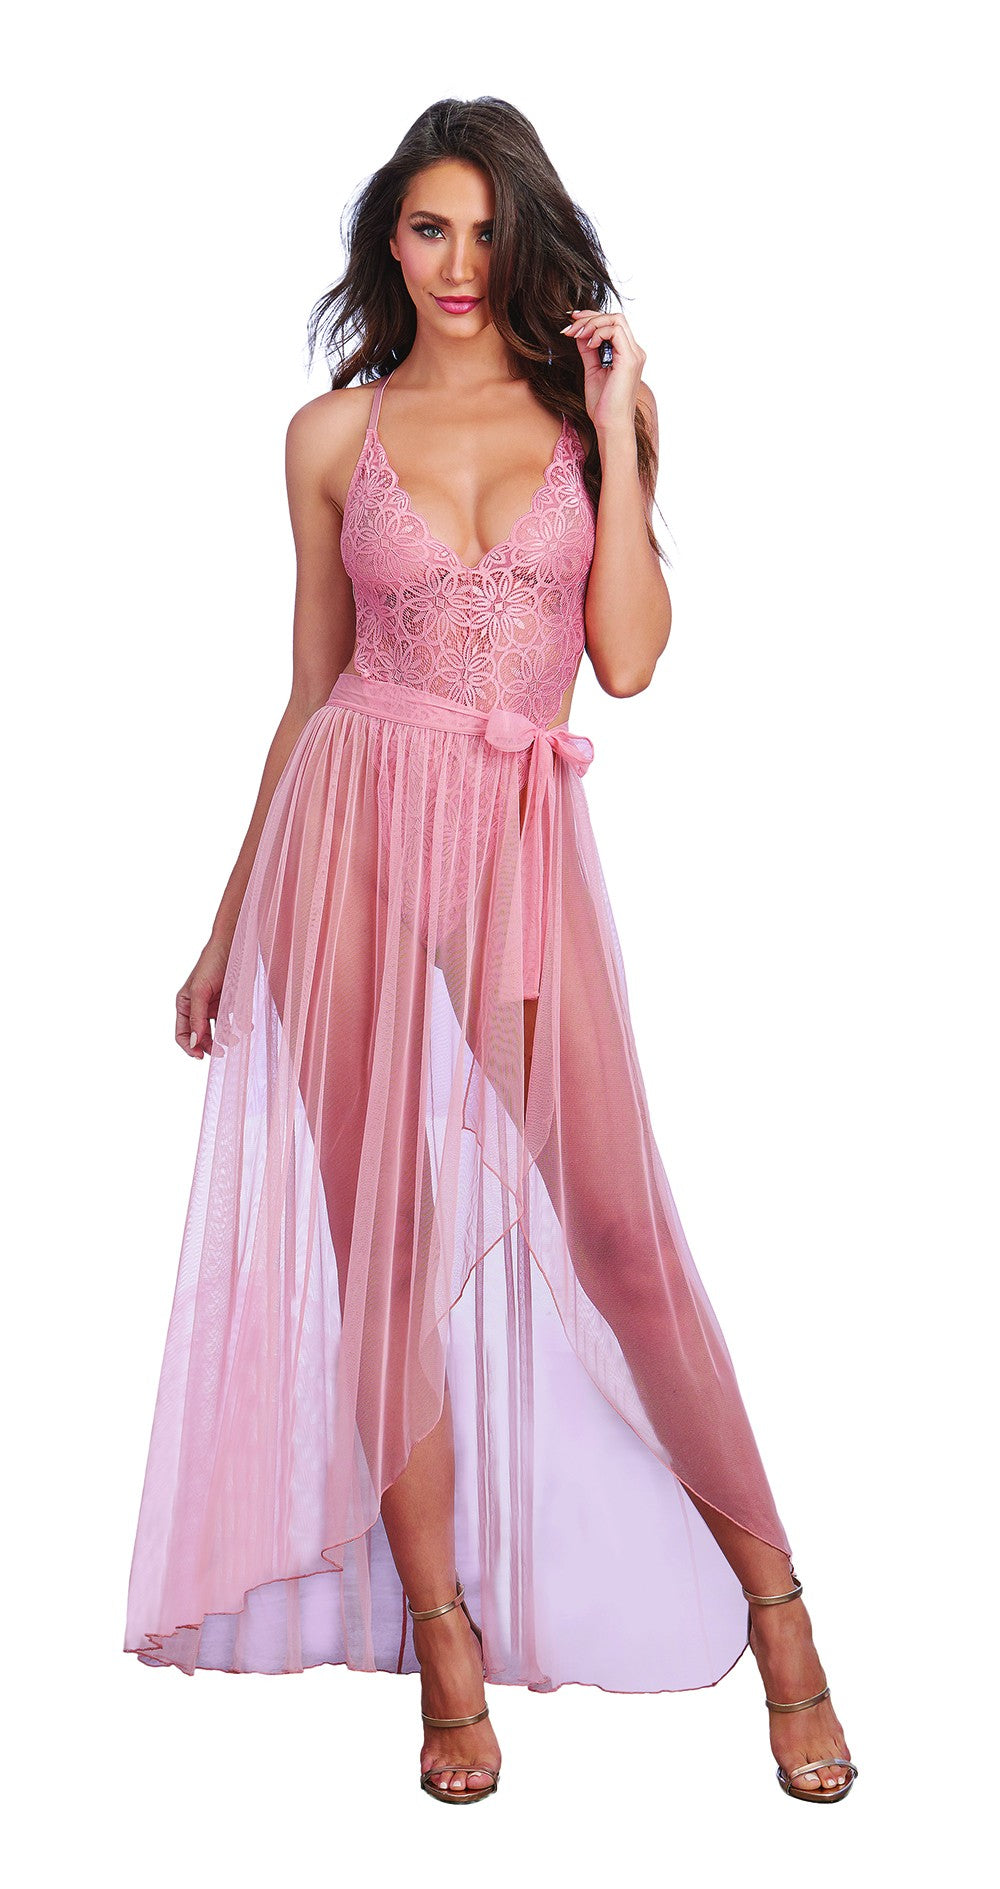 Lingerie Dreamgirl : Body string rose échancré et jupe